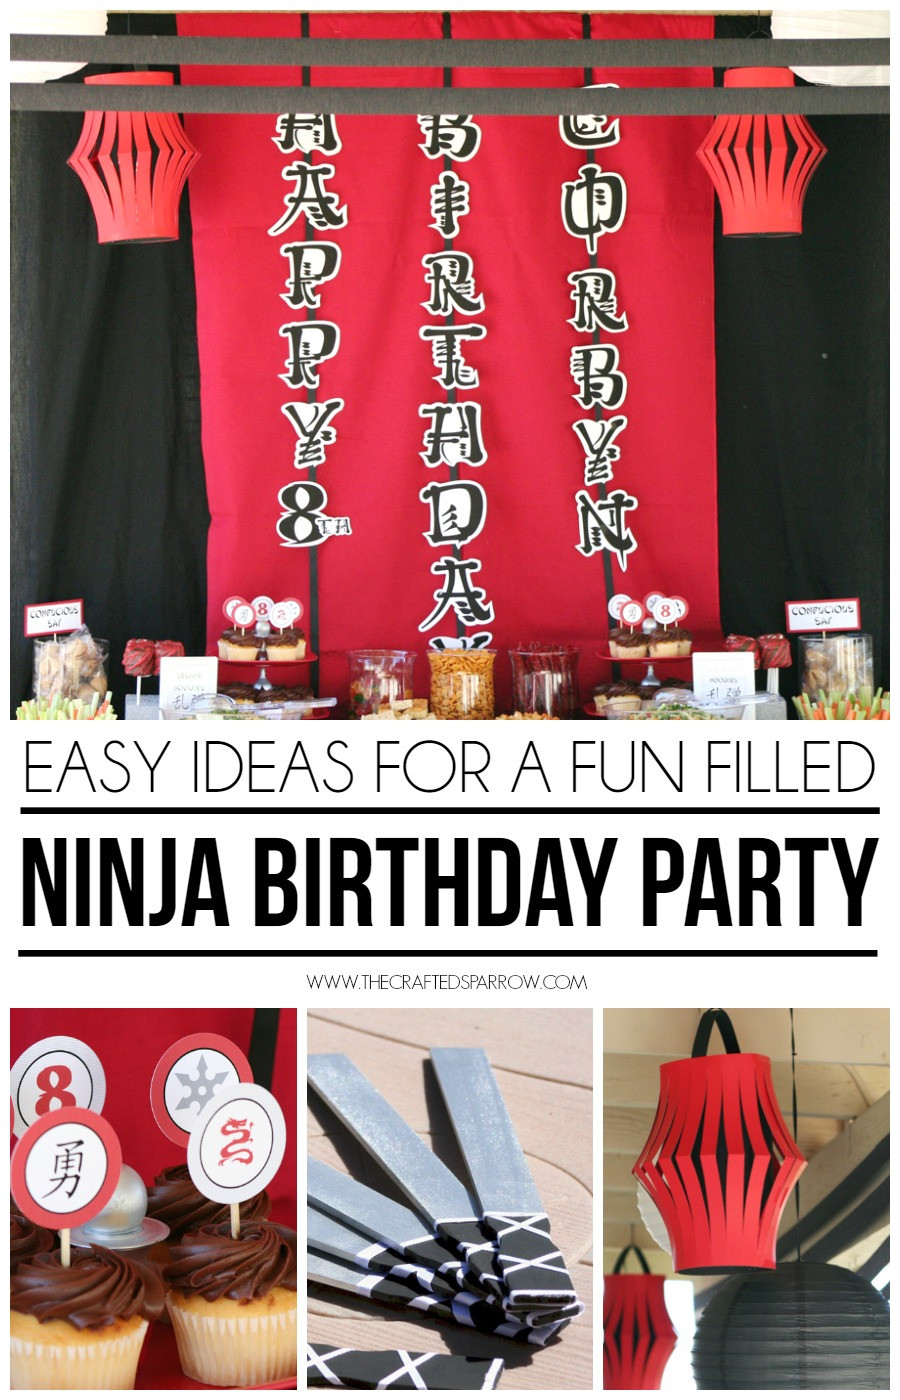 Ninja Birthday Party Ideas
 Ninja Birthday Party